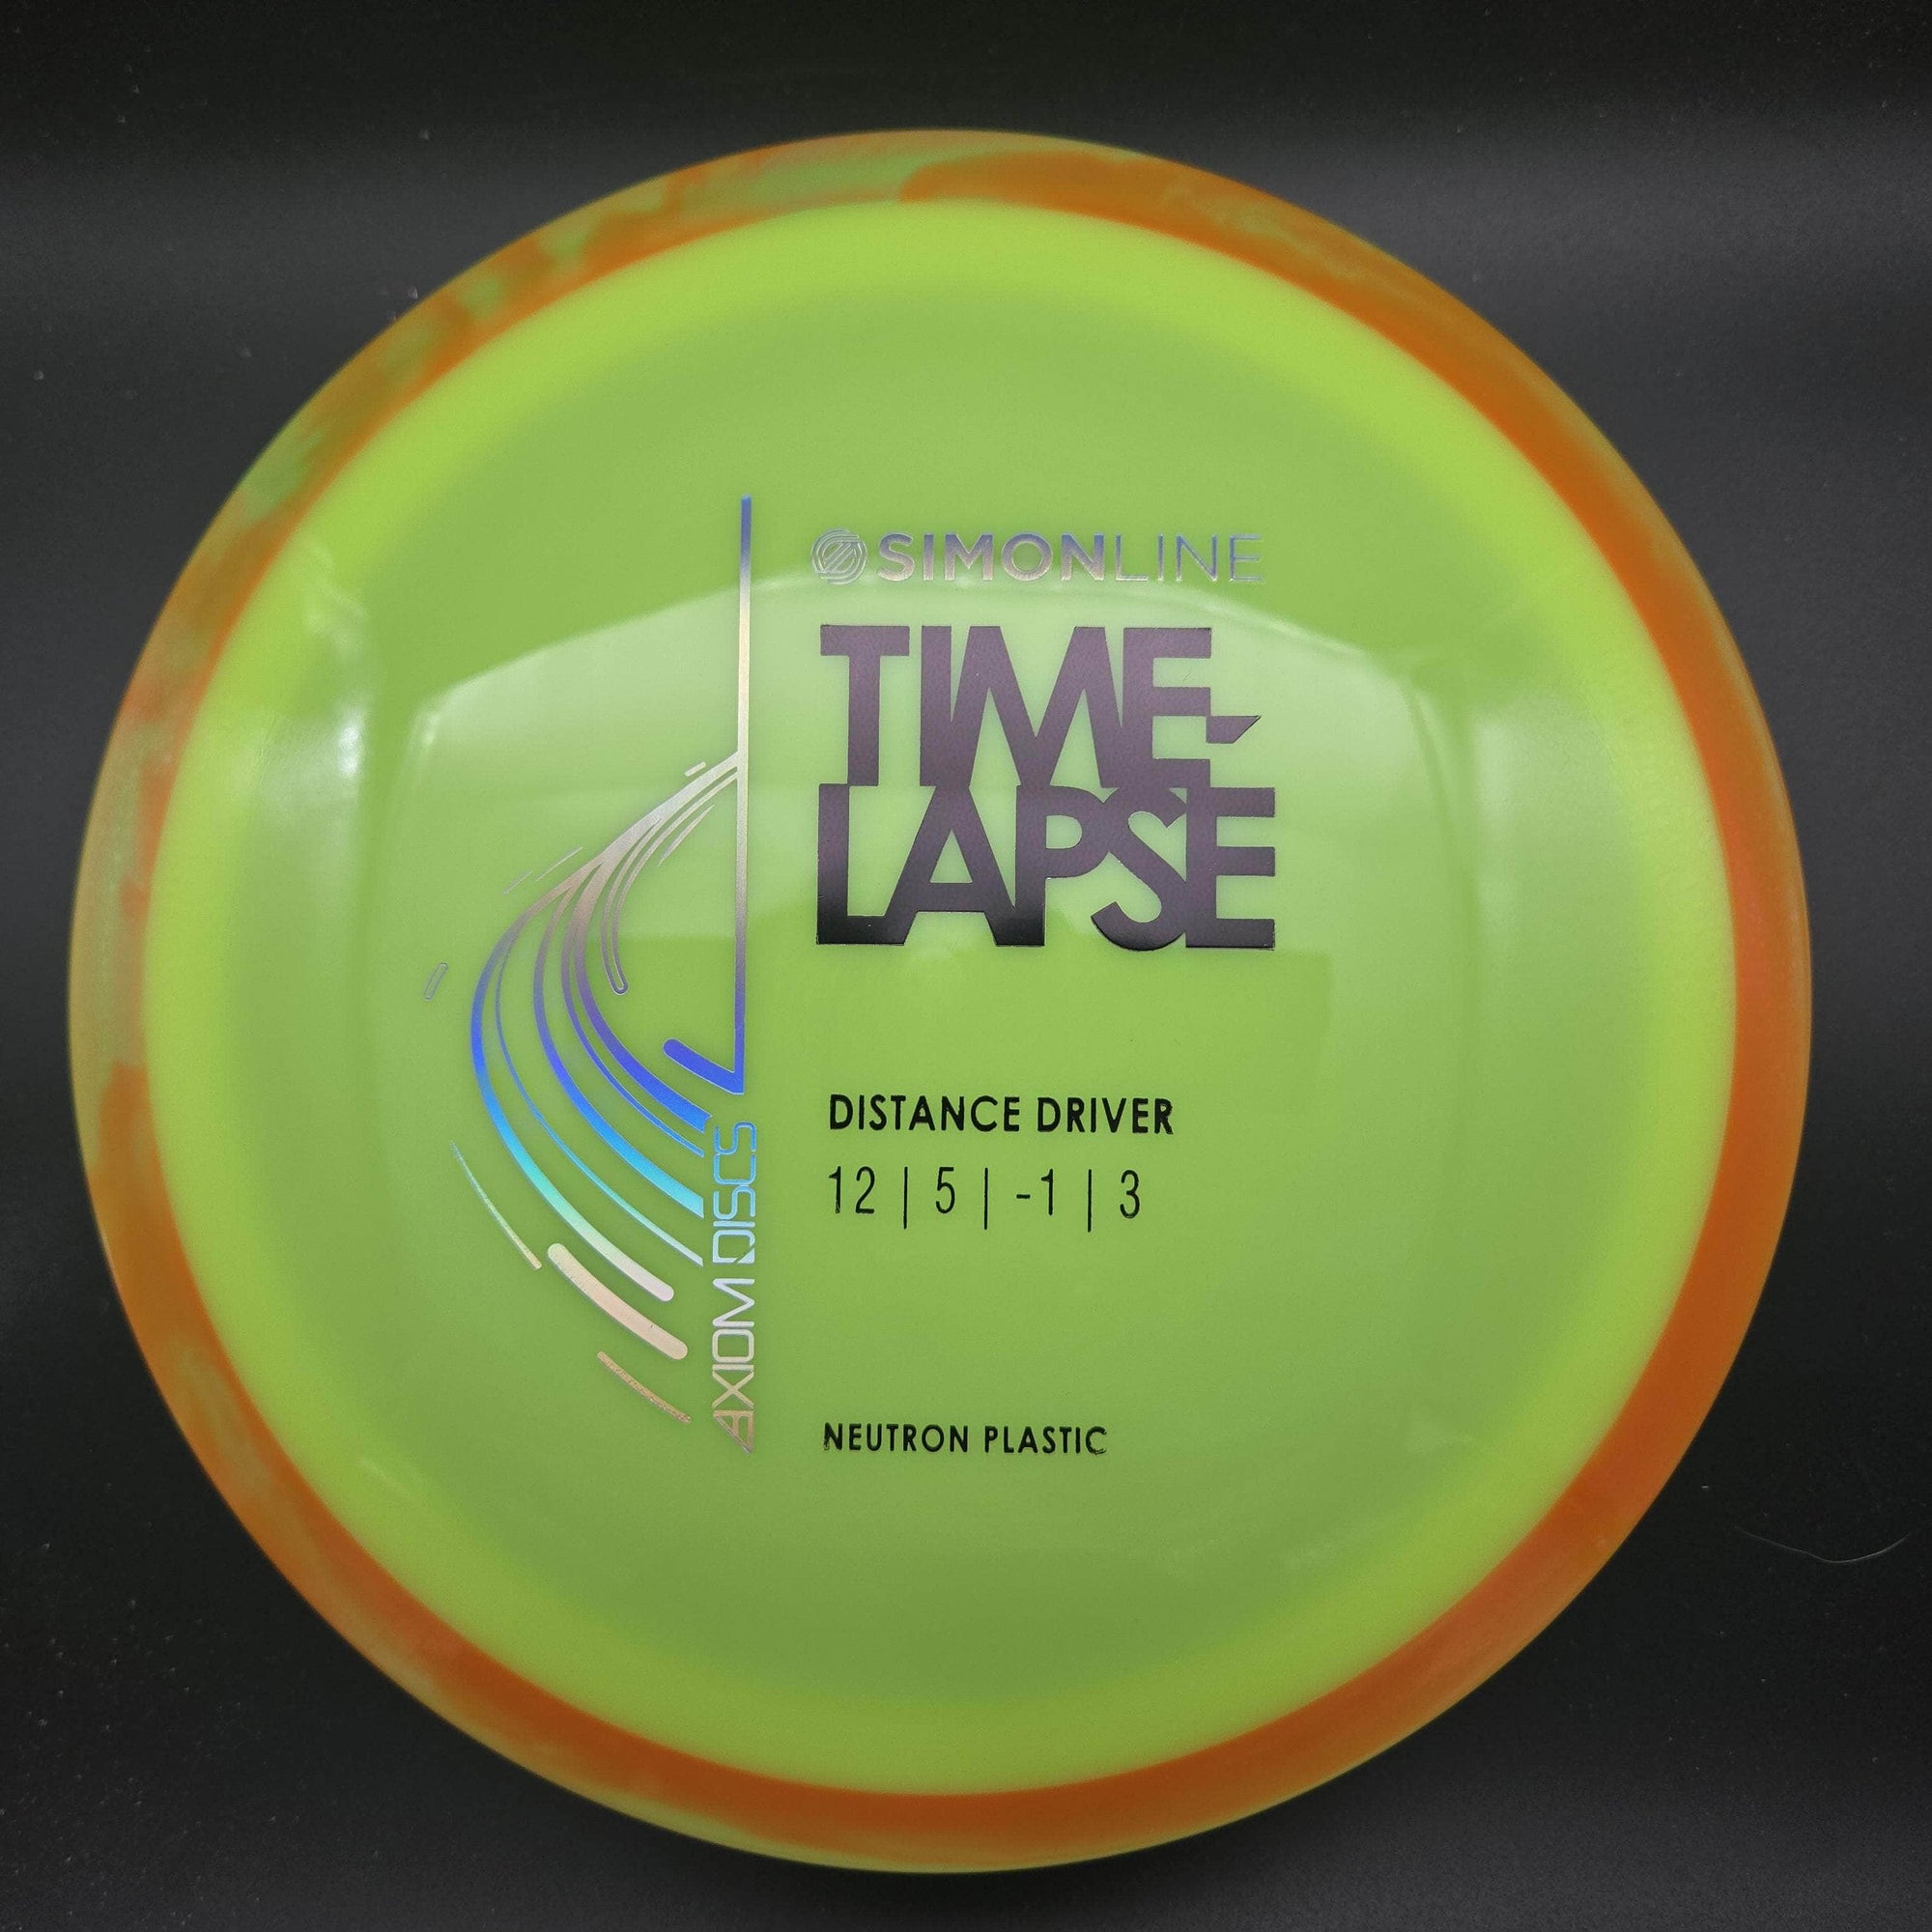 Axiom Distance Driver Orange/Green Rime Yellow Plate 172g Time Lapse, Neutron, Simon Line